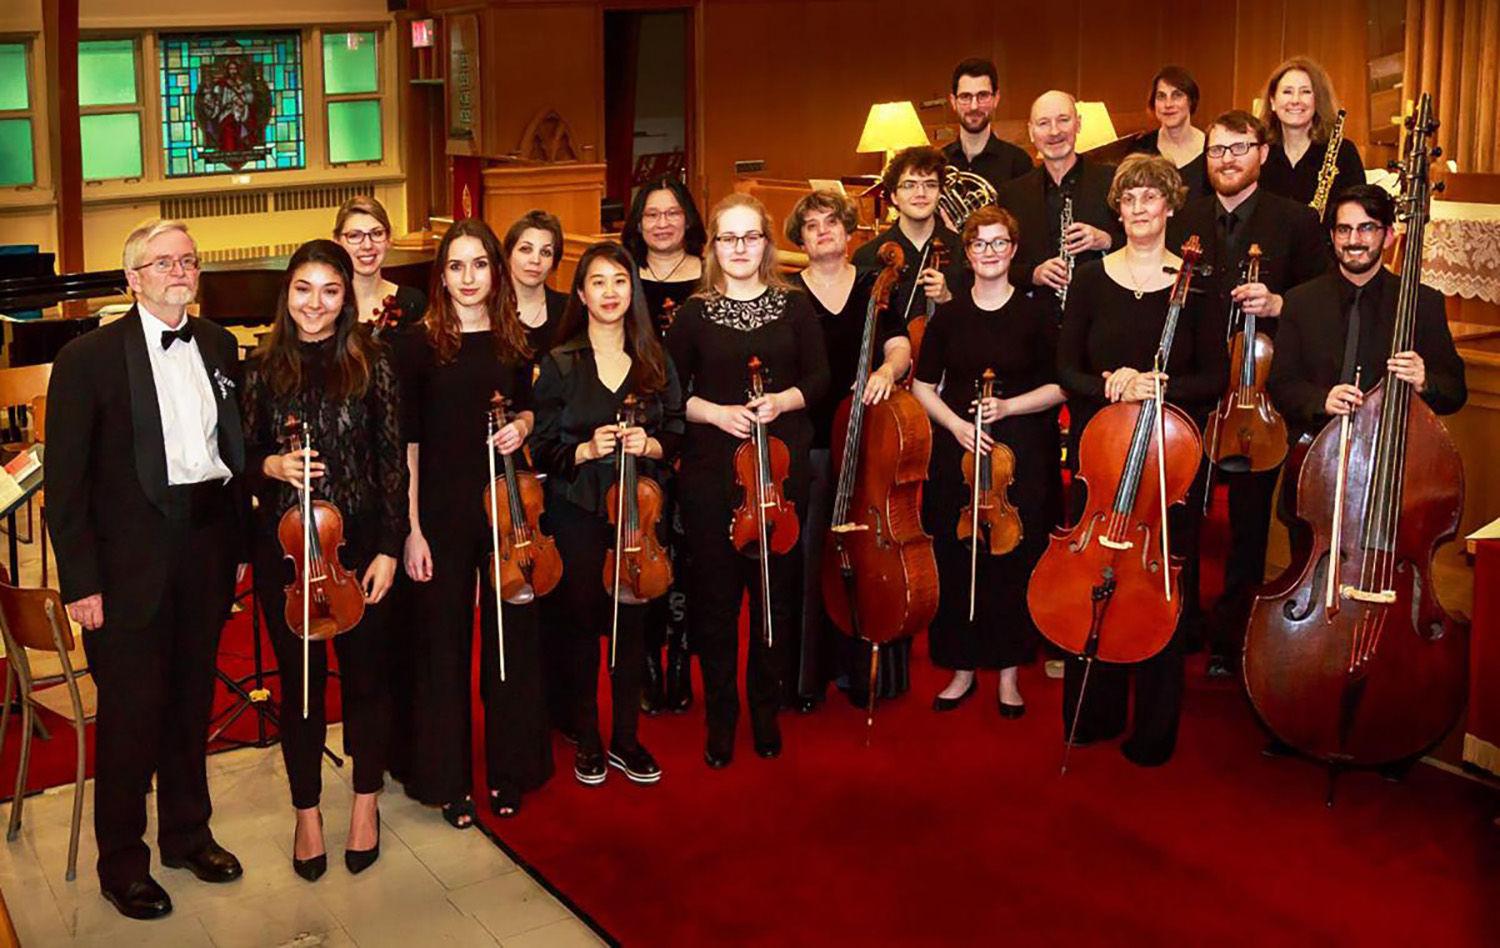 Centre culturel Le Chenail celebrating 46th anniversary with benefit concert by Sinfonia de l’Ouest orchestra